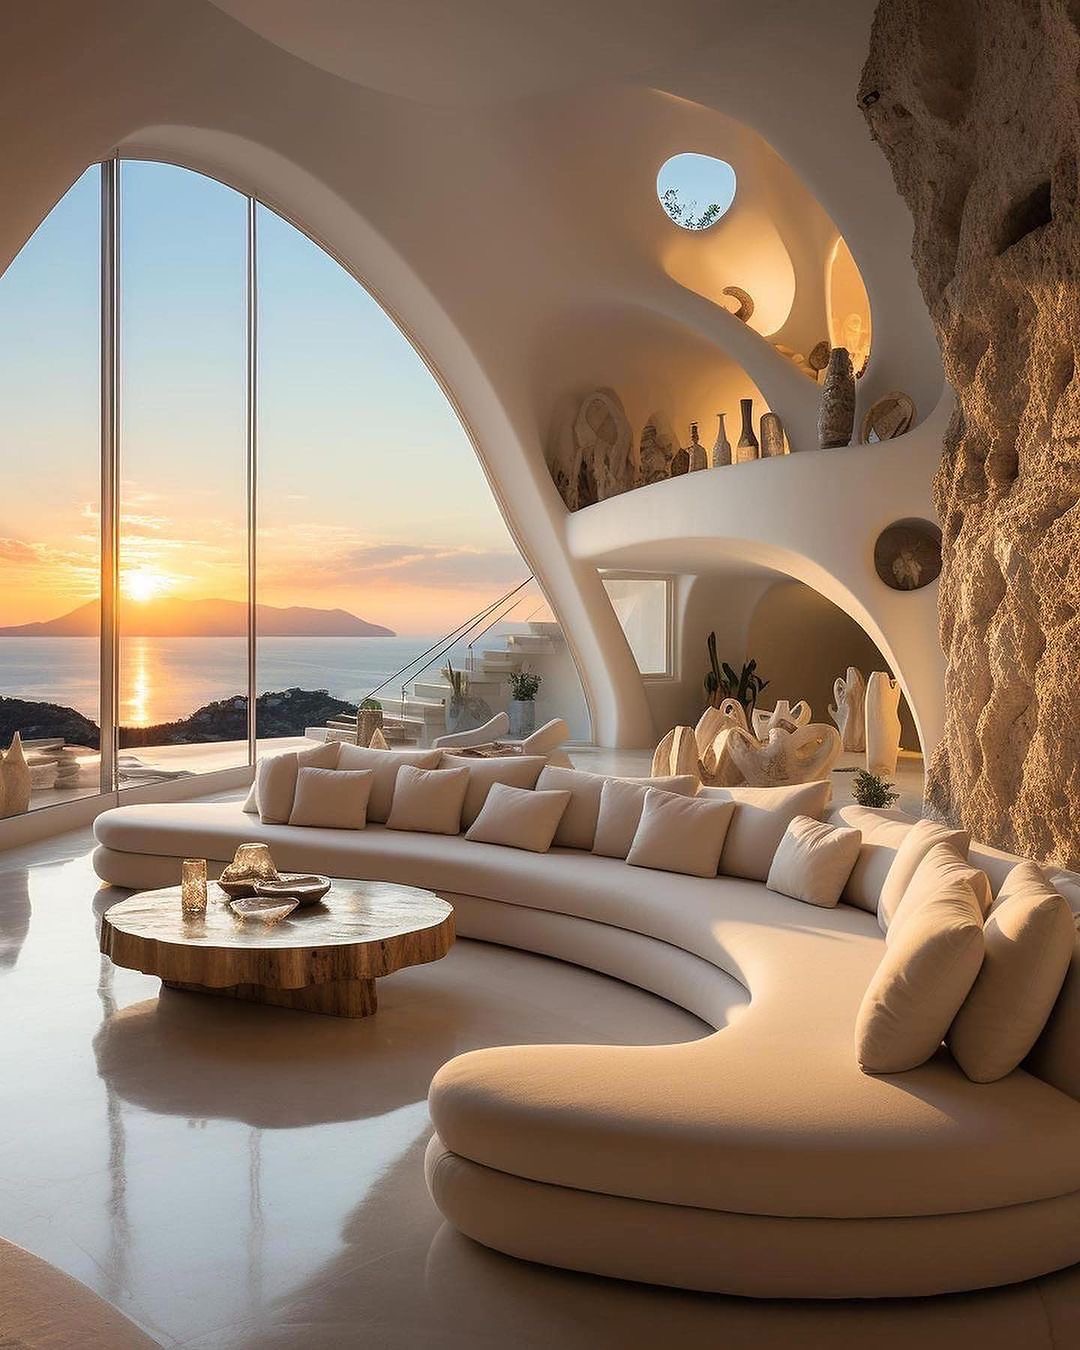 Greek Inspired Dream Home Sitting Room